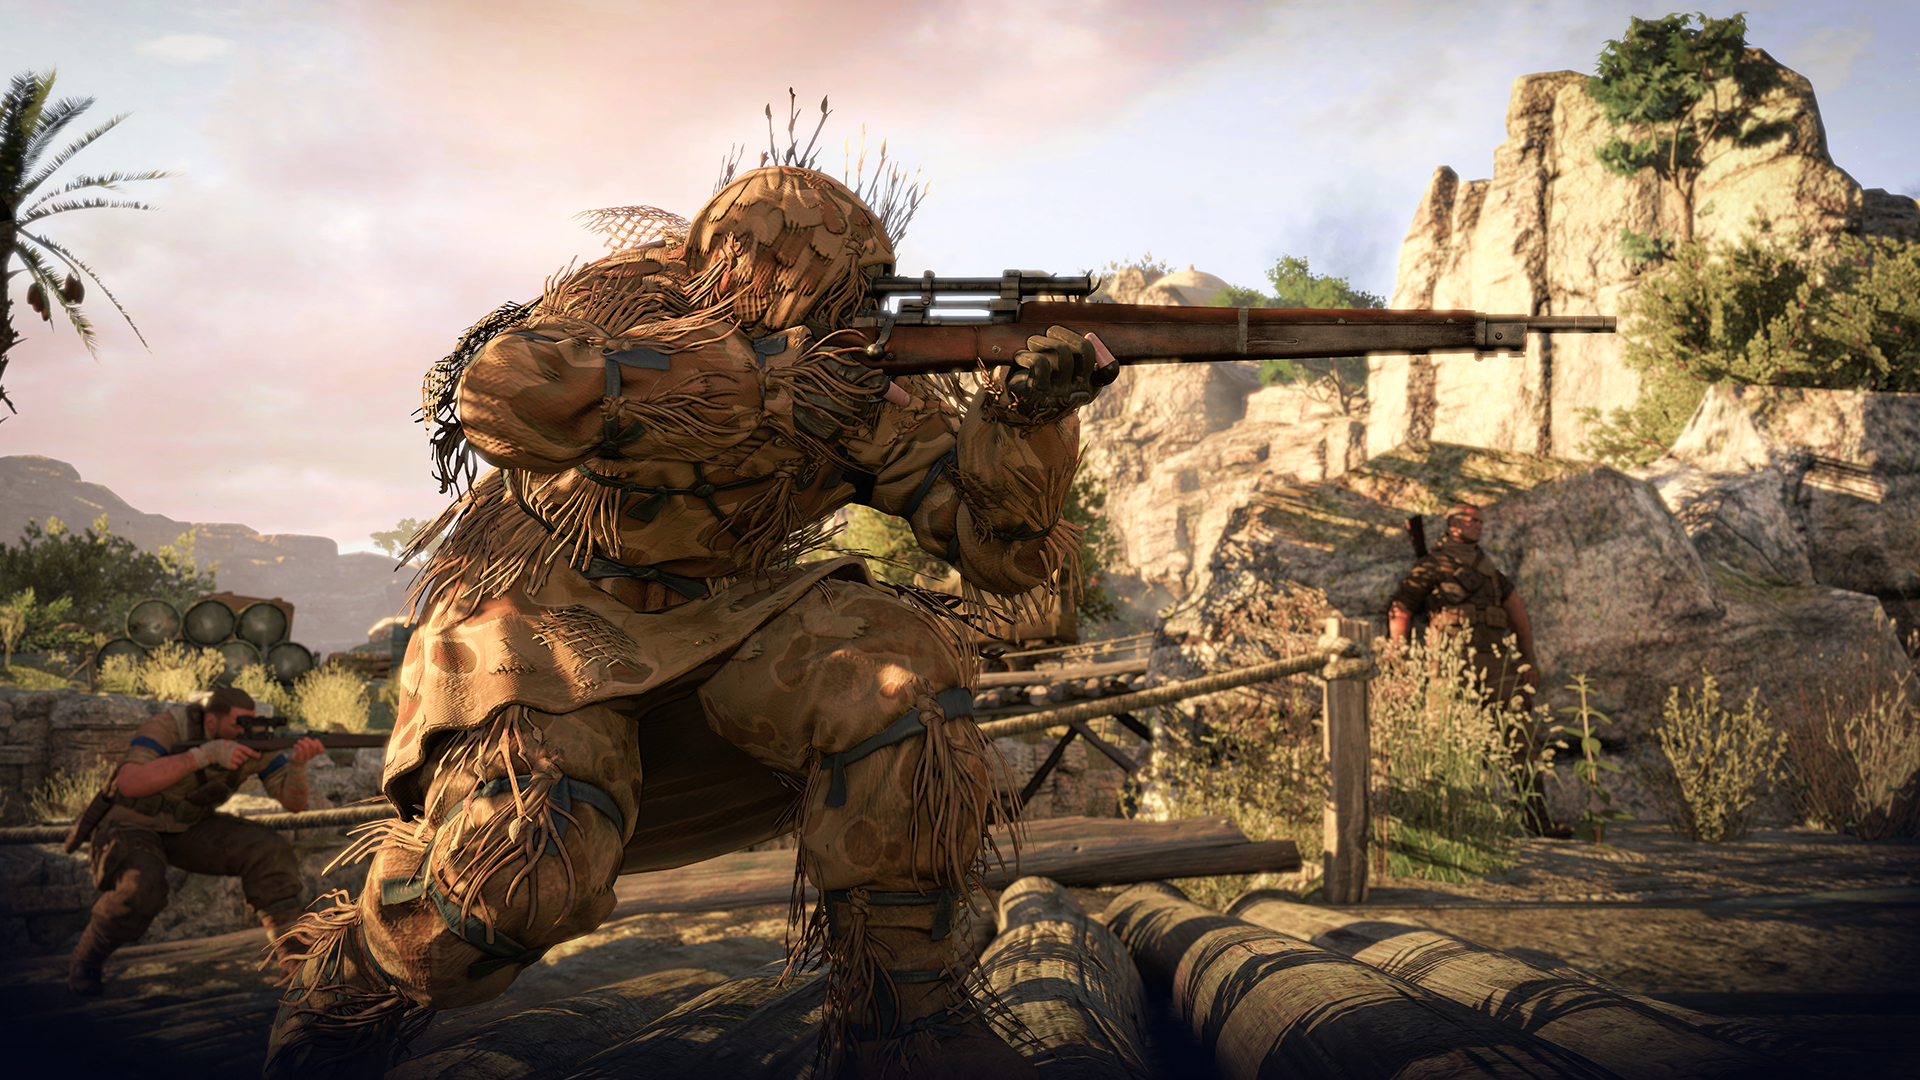 Save 87% on Sniper Elite 3 on Steam